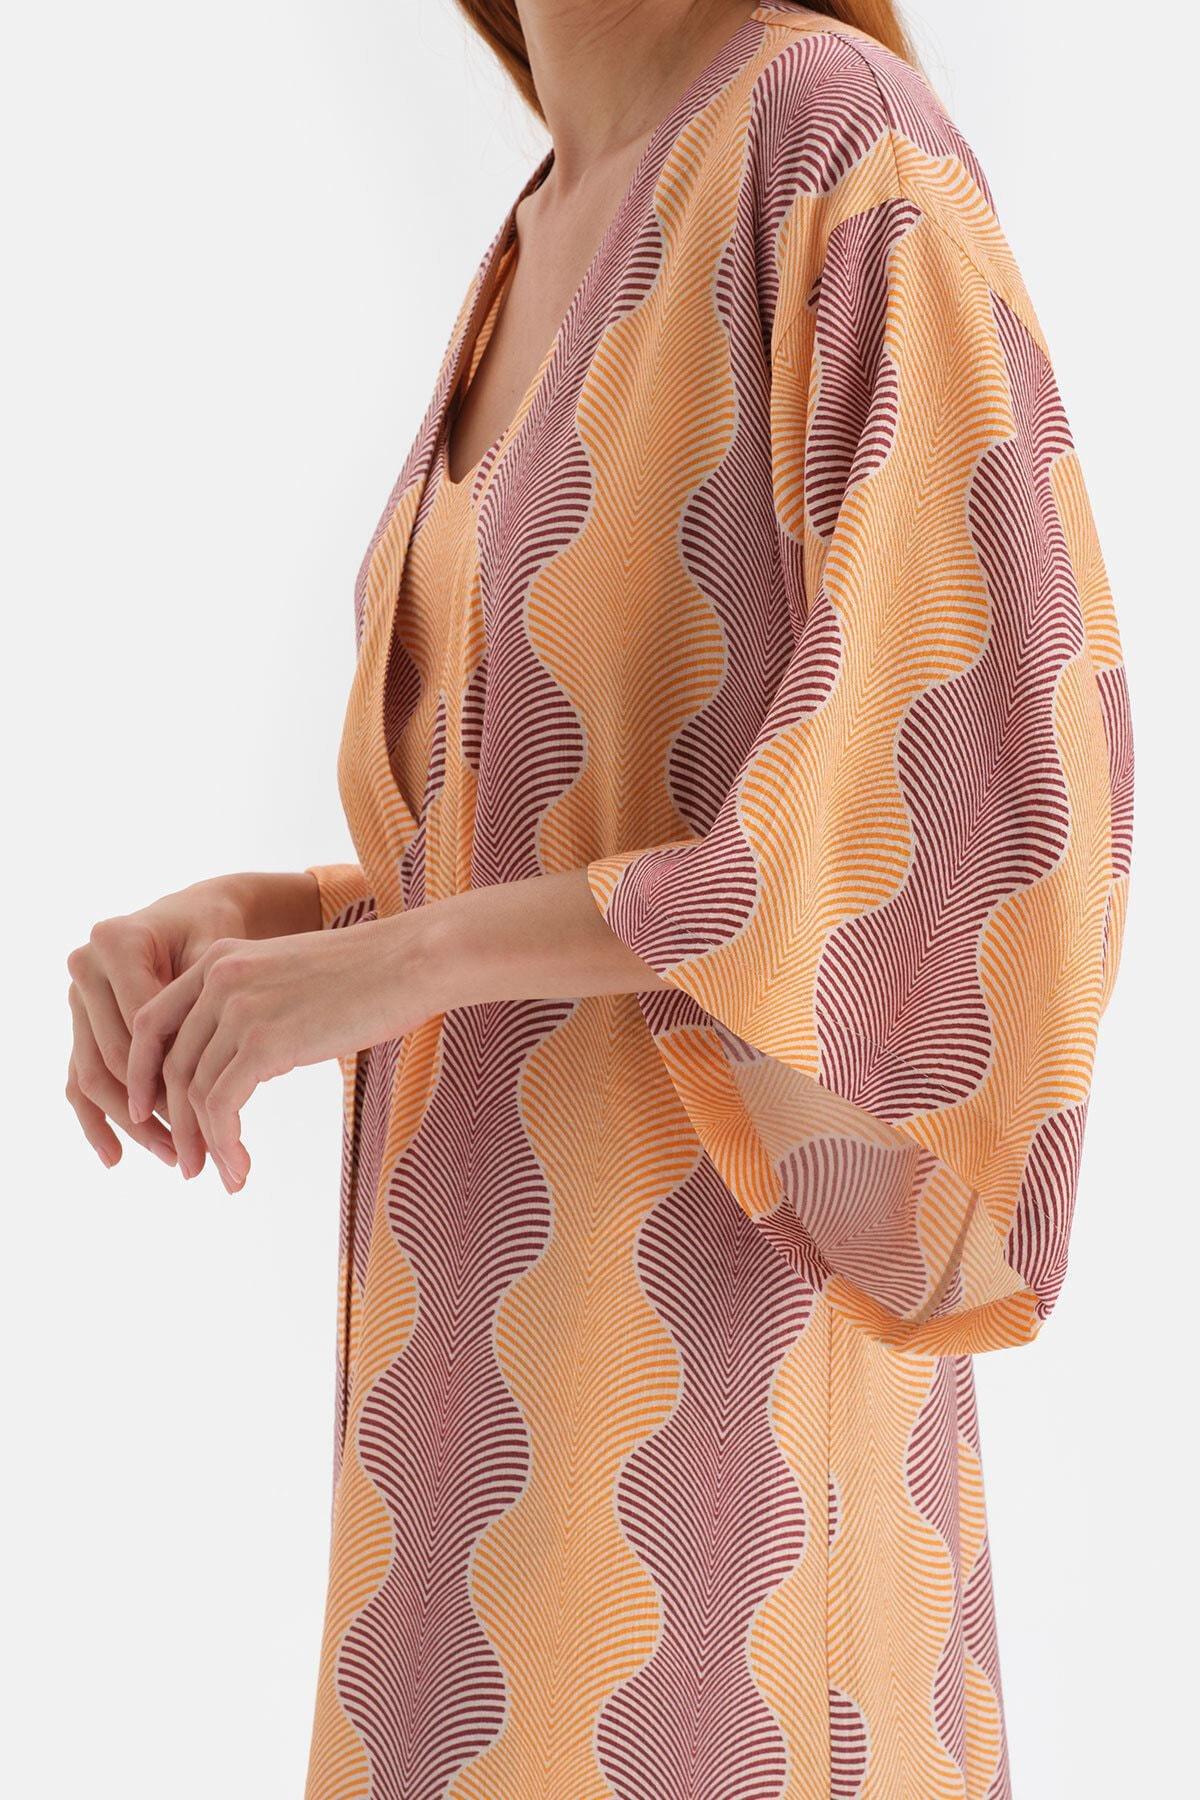 Dagi - Multicolour Patterned Robe Dress